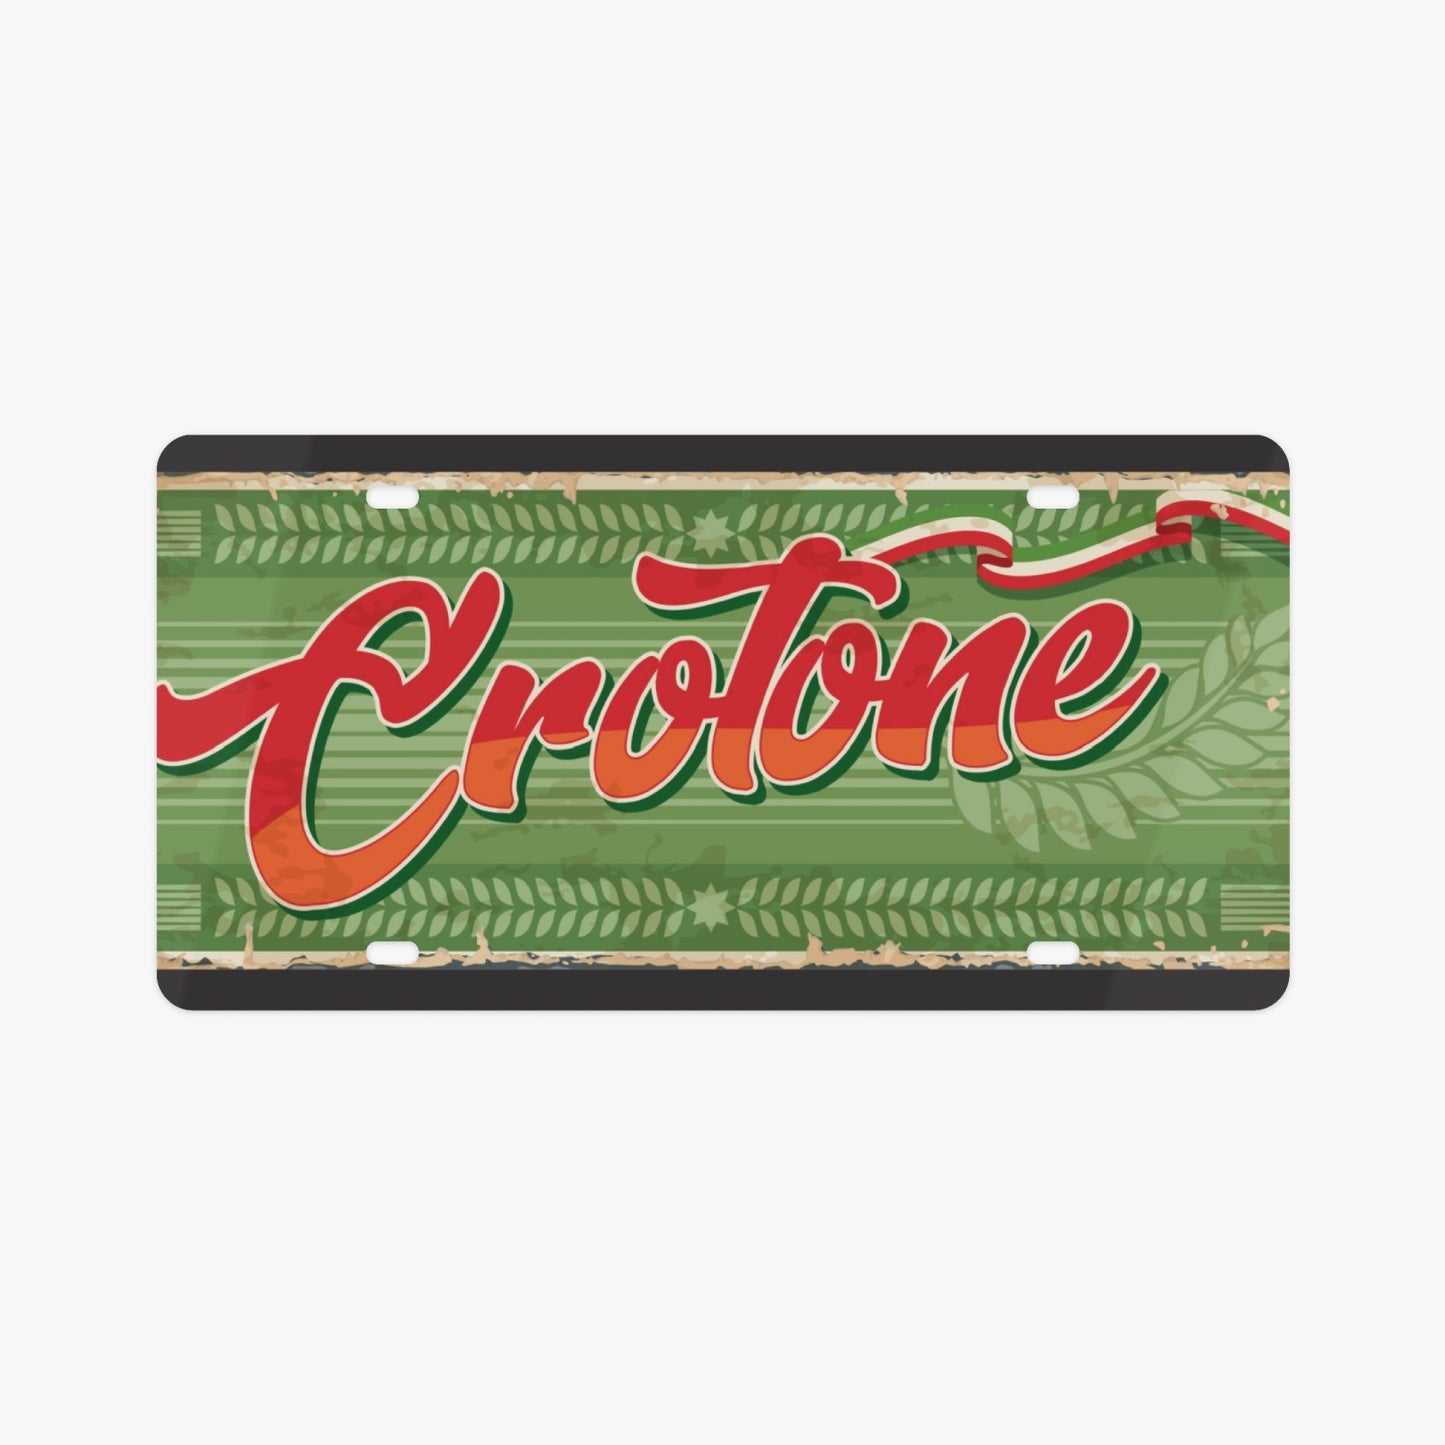 Crotone License Plate Italian Style